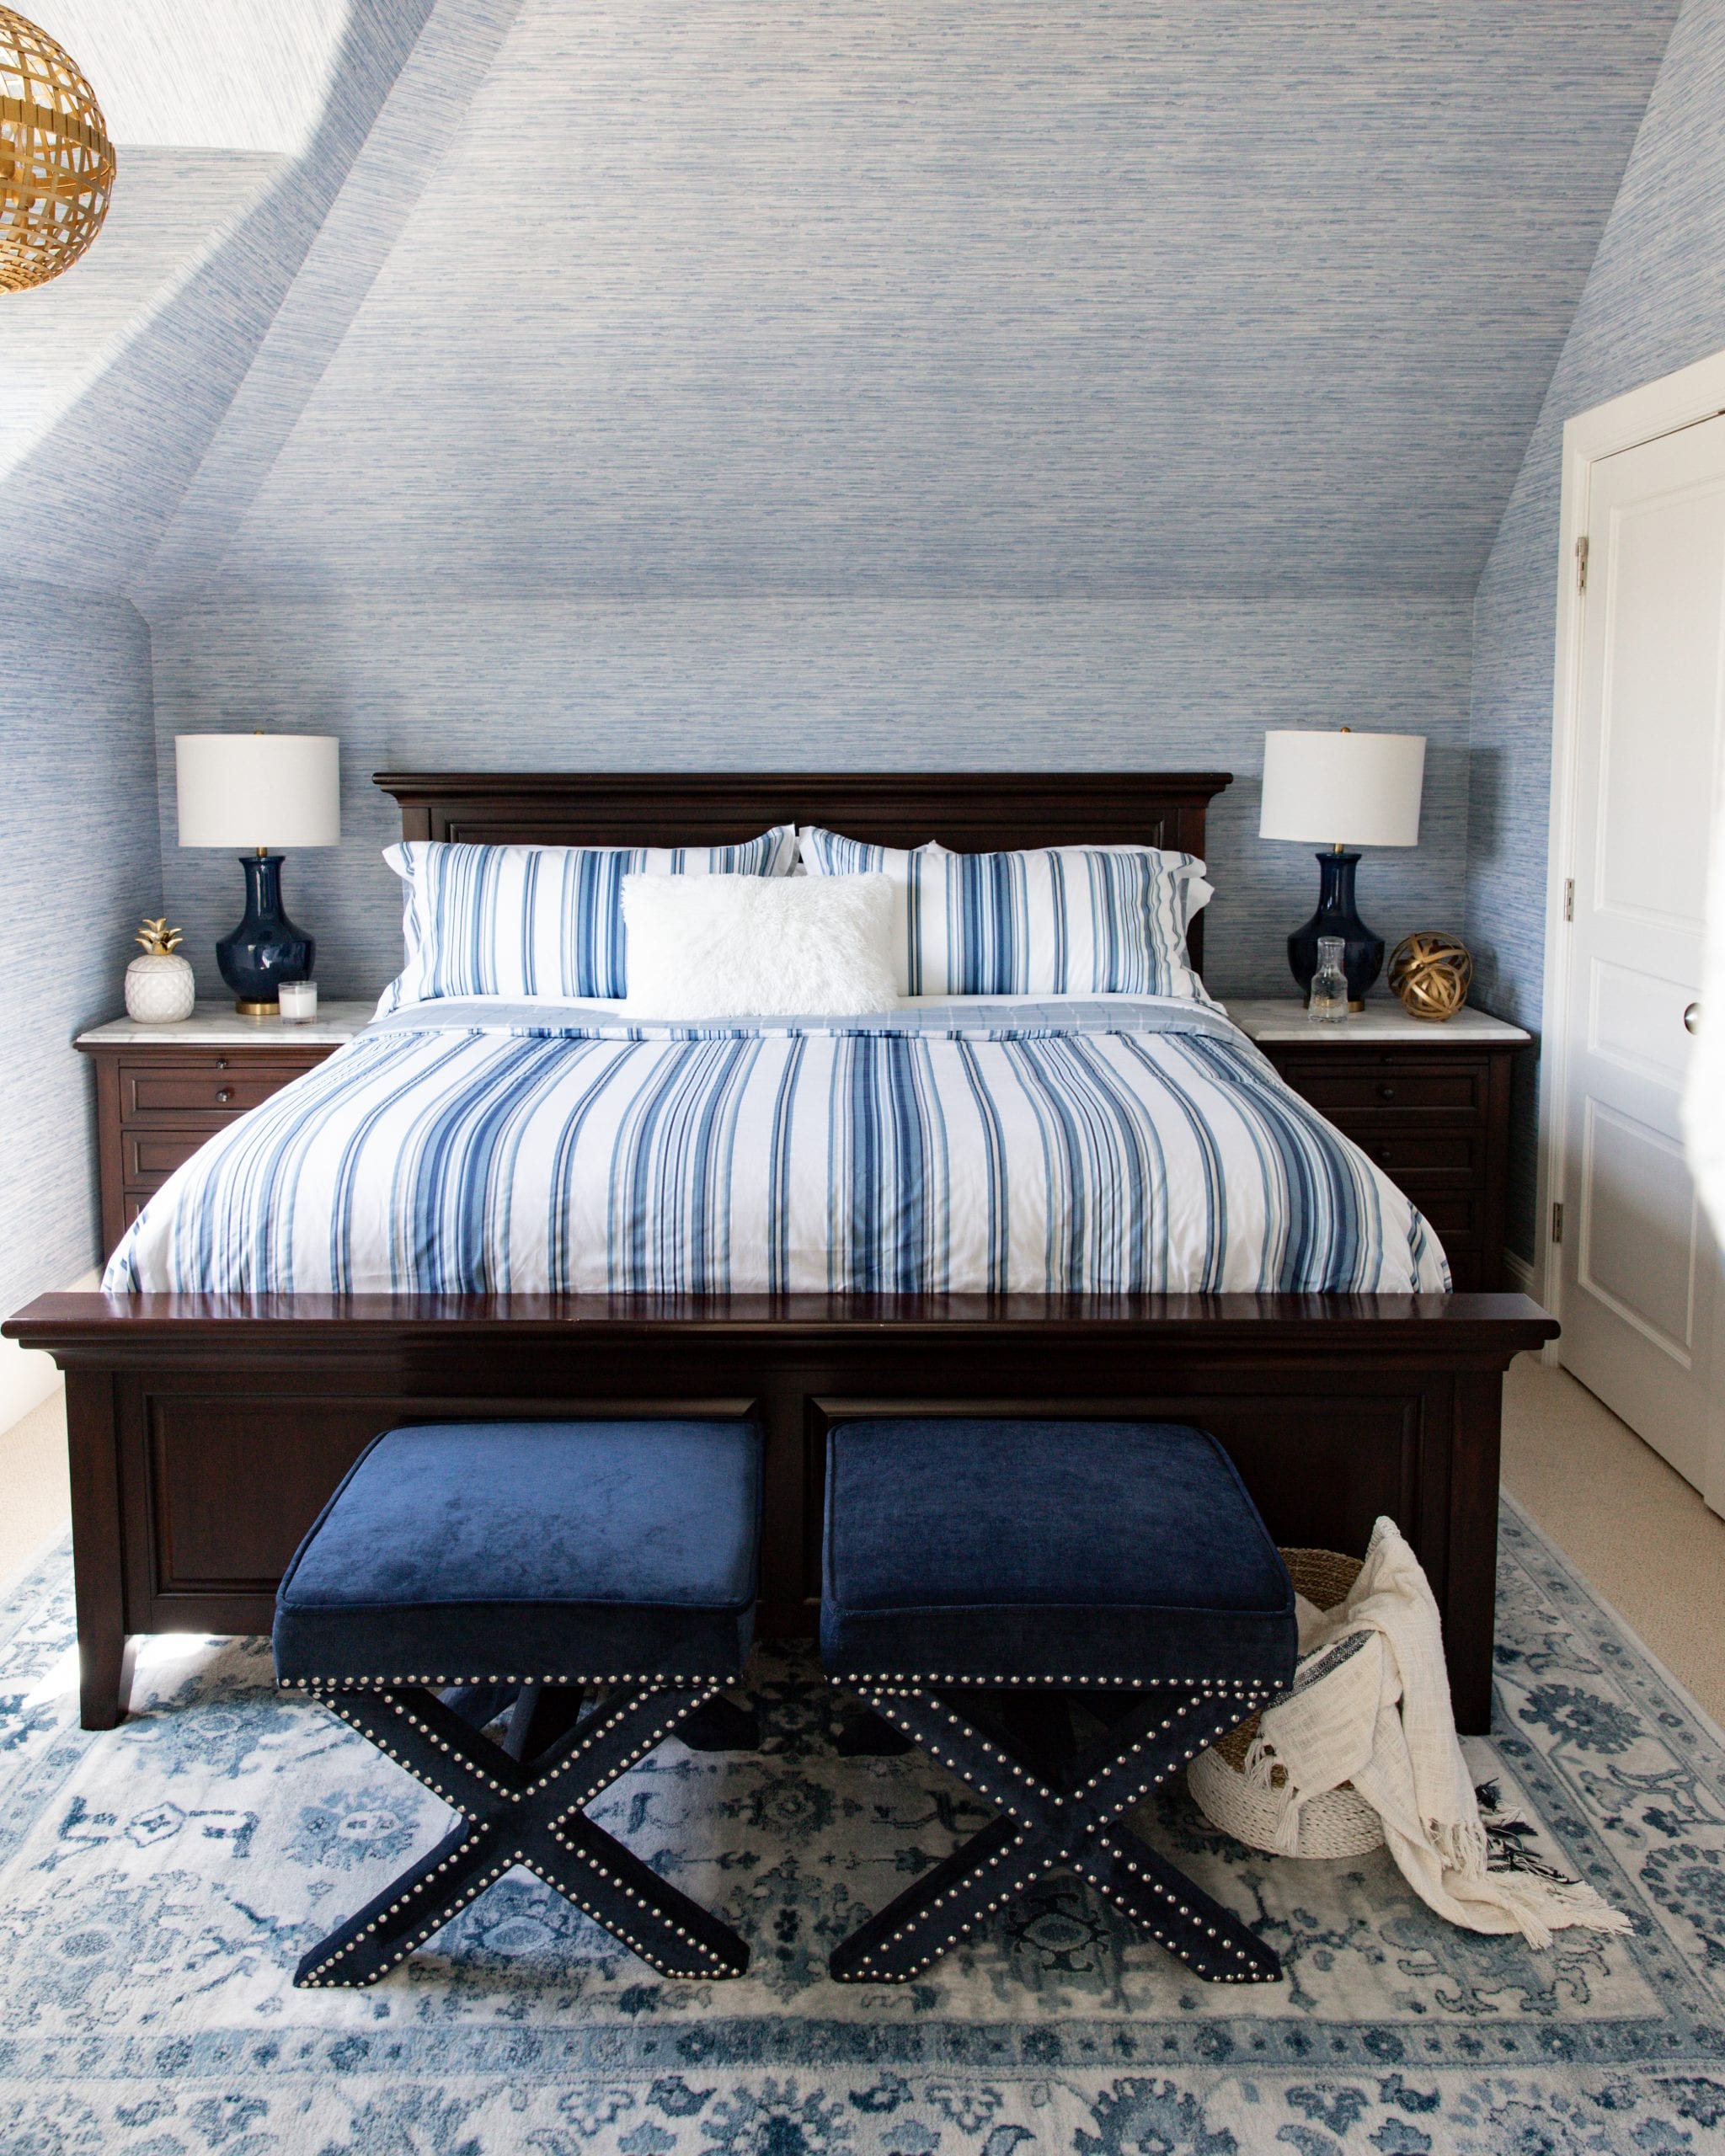 blue bedroom decor